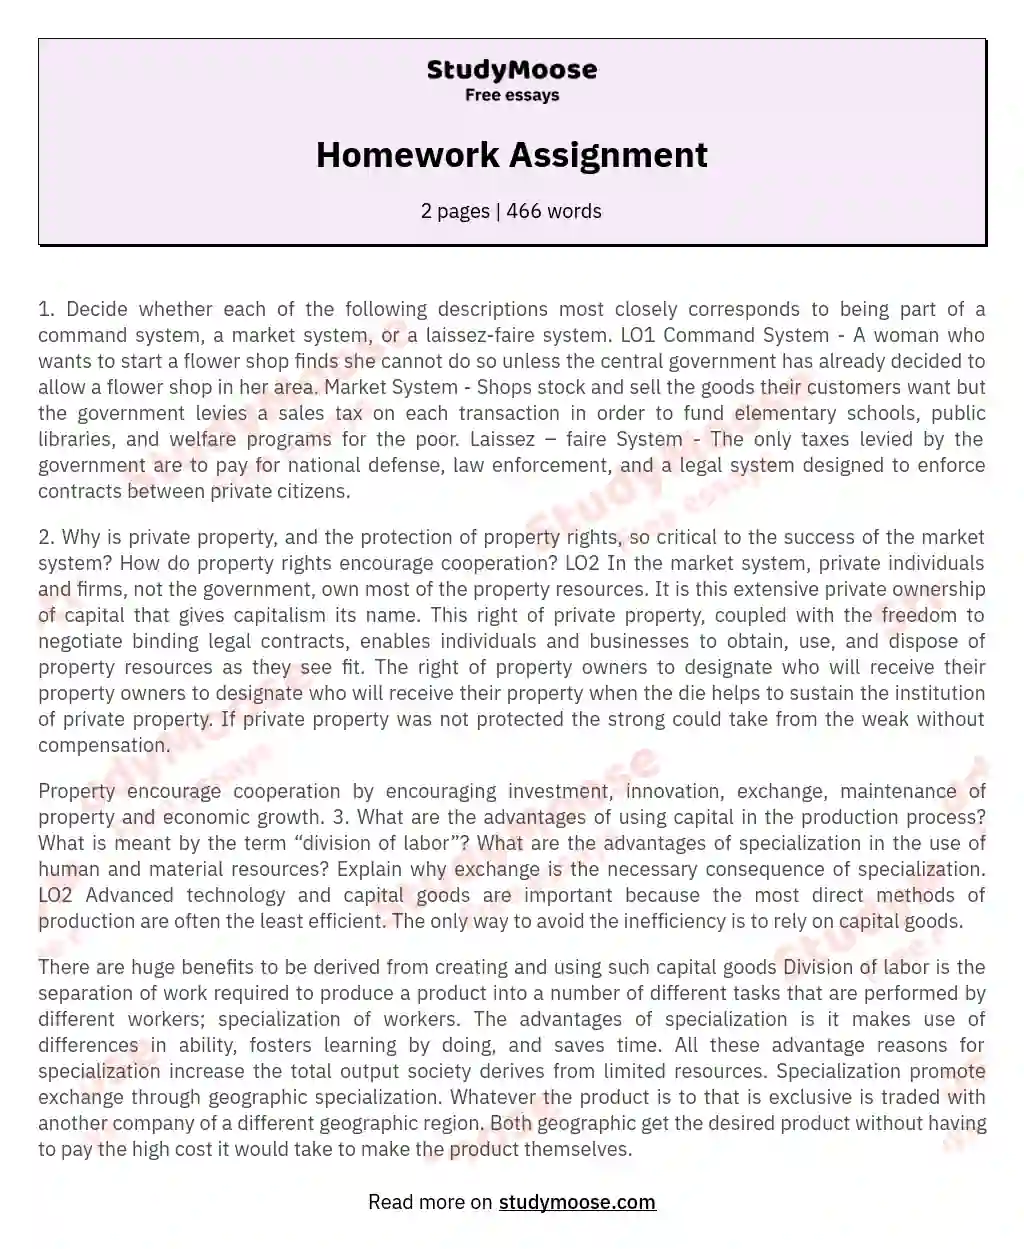 Homework Assignment essay